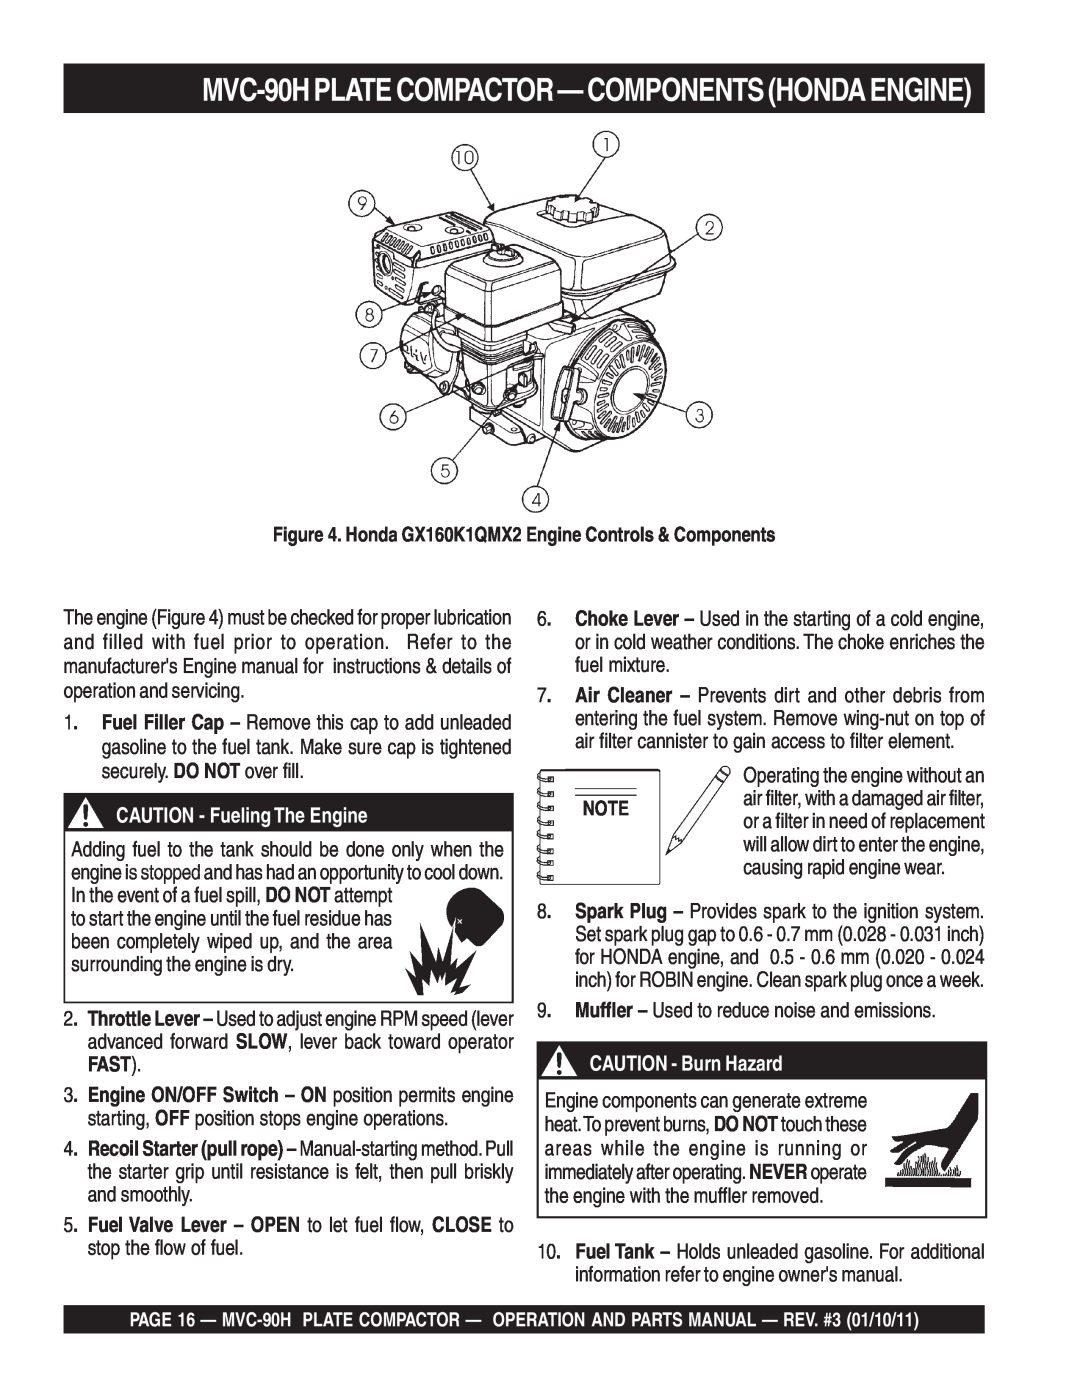 Multiquip manual MVC-90HPLATECOMPACTOR-COMPONENTSHONDAENGINE, CAUTION - Fueling The Engine, CAUTION - Burn Hazard 